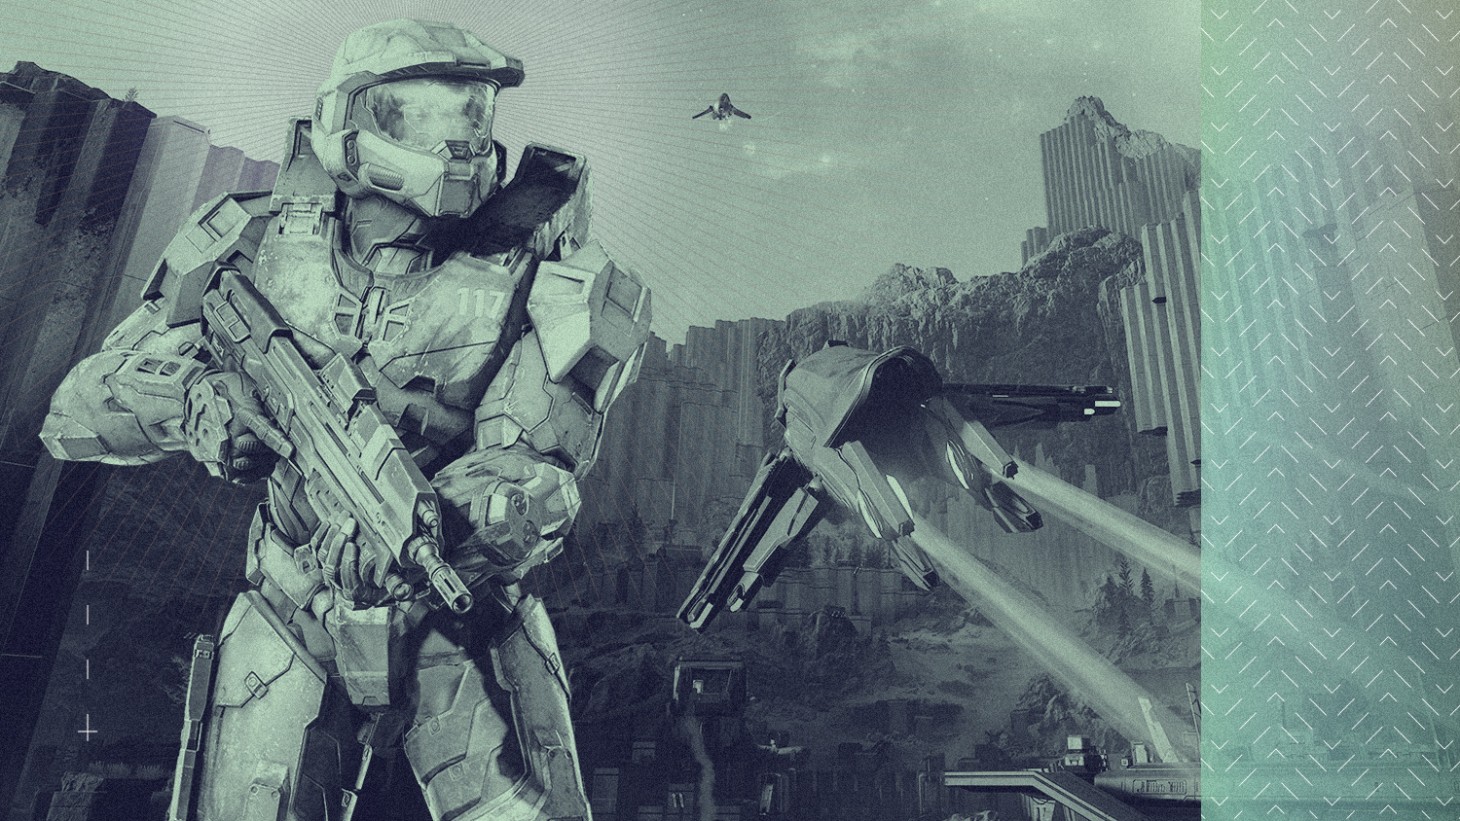 Legendary Halo designer joins Netflix to create original AAA game